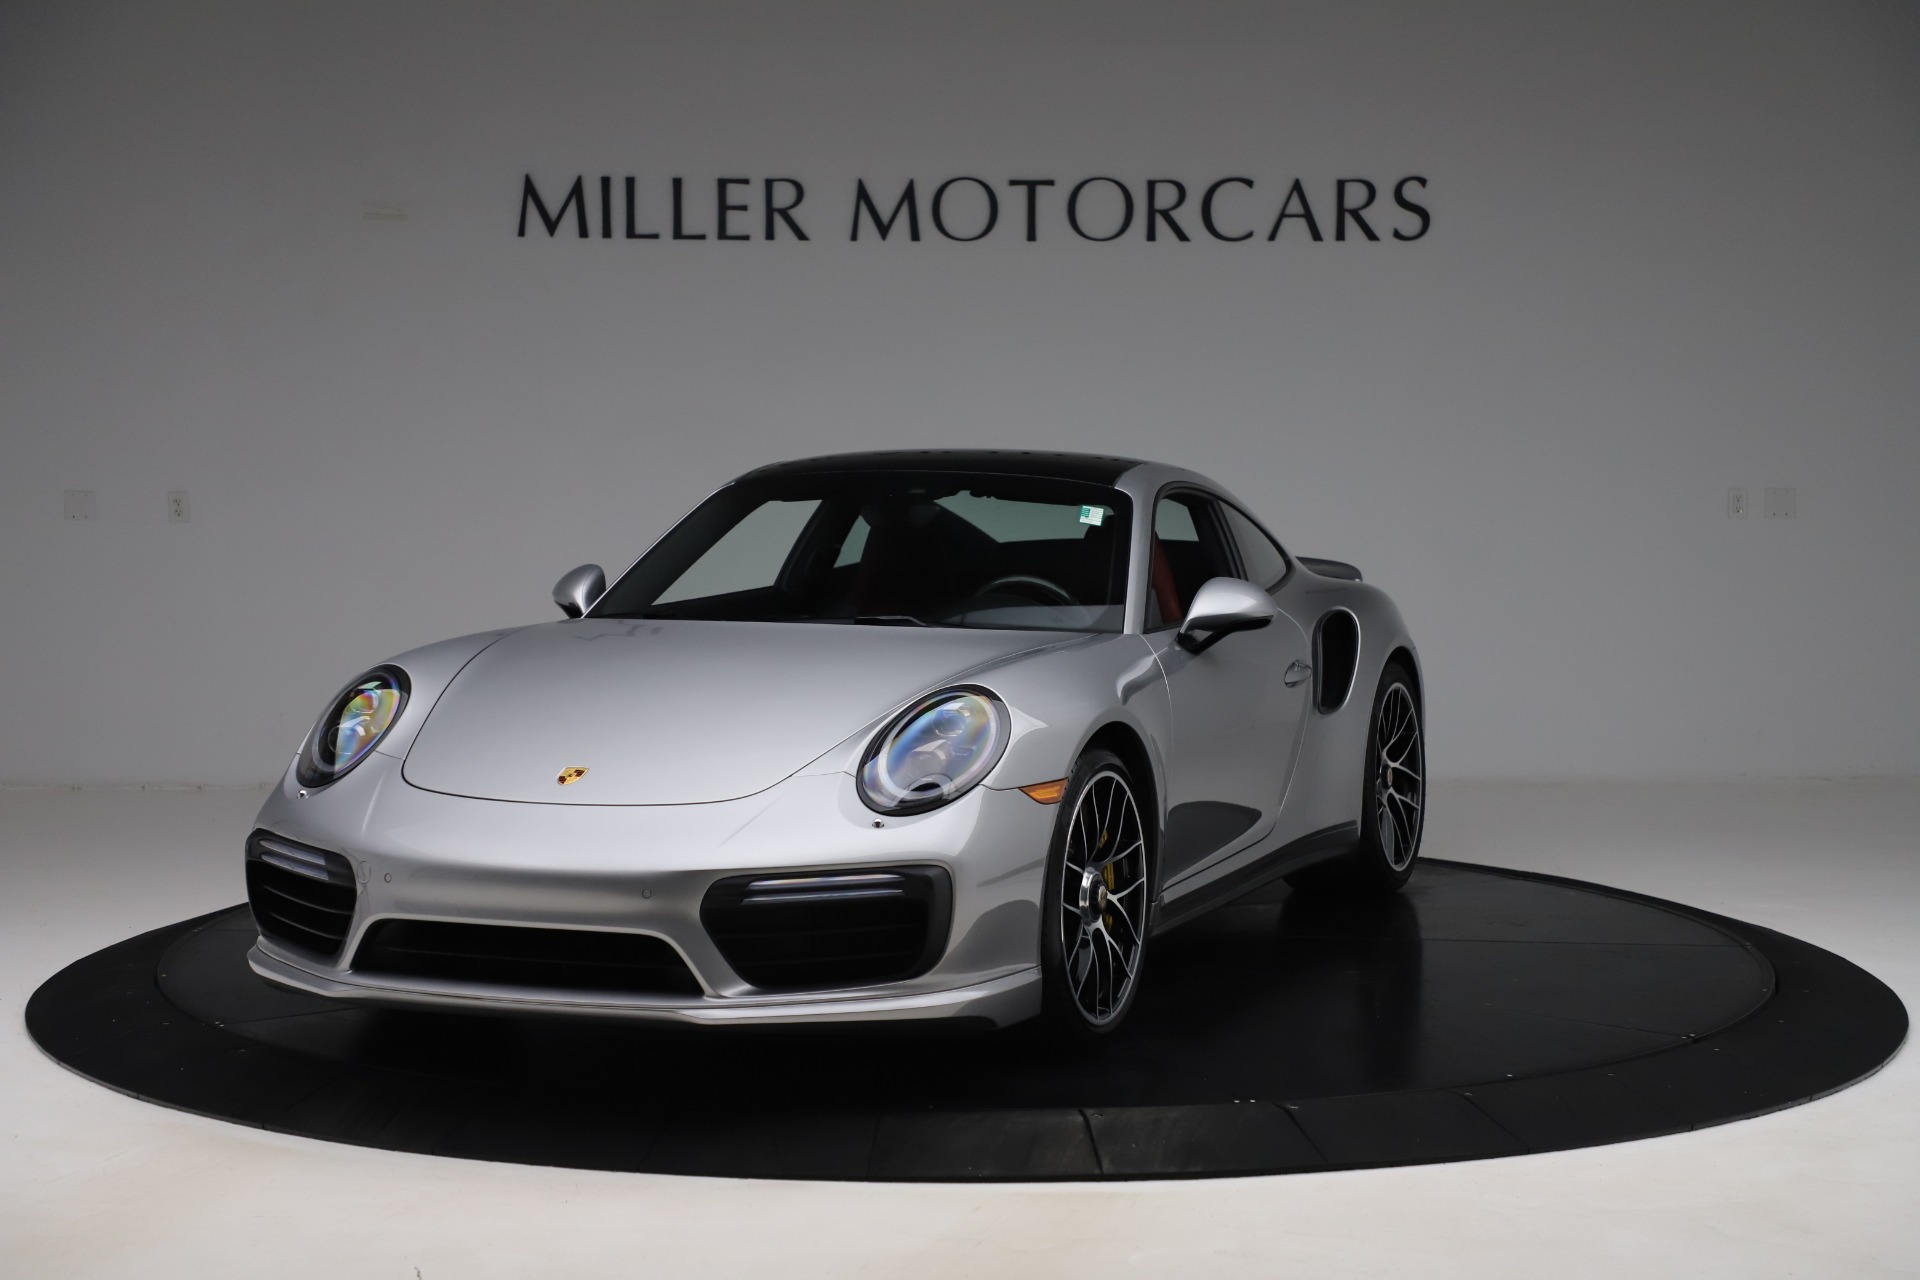 2017 Porsche 911 Prices, Reviews, and Photos - MotorTrend